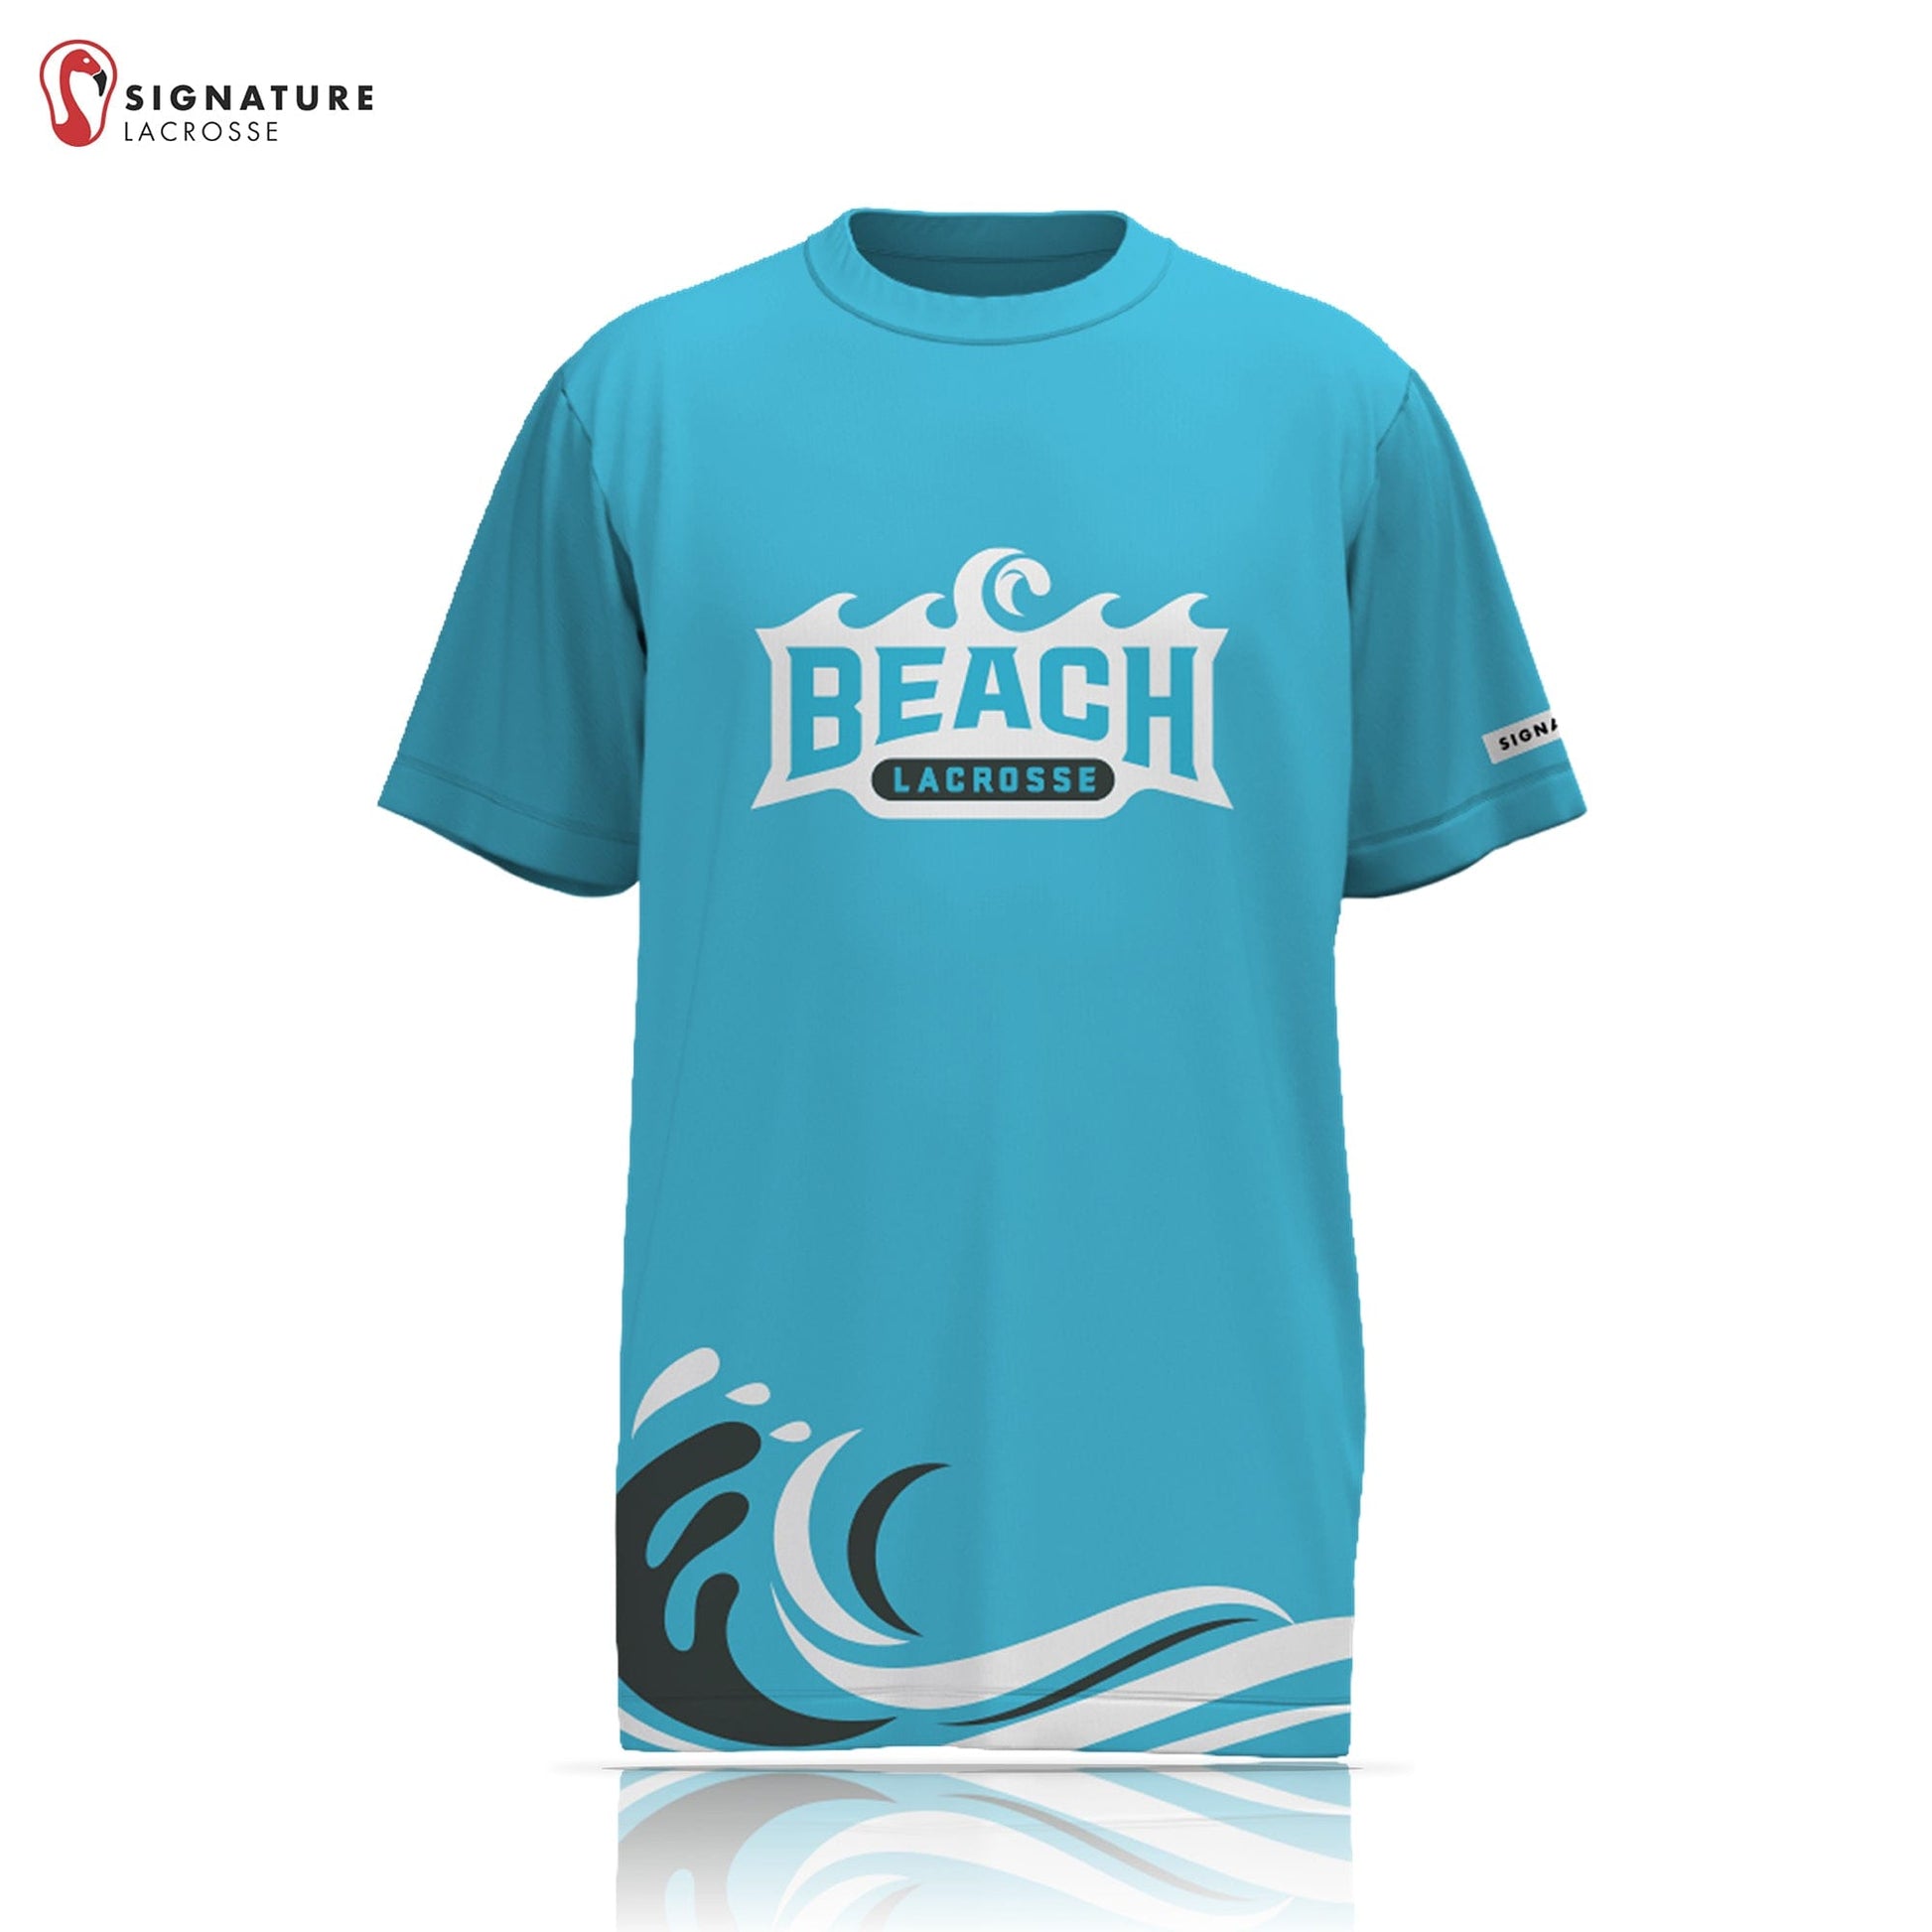 Beach Lacrosse Women's Short Sleeve Shooting Shirt: 12U Signature Lacrosse